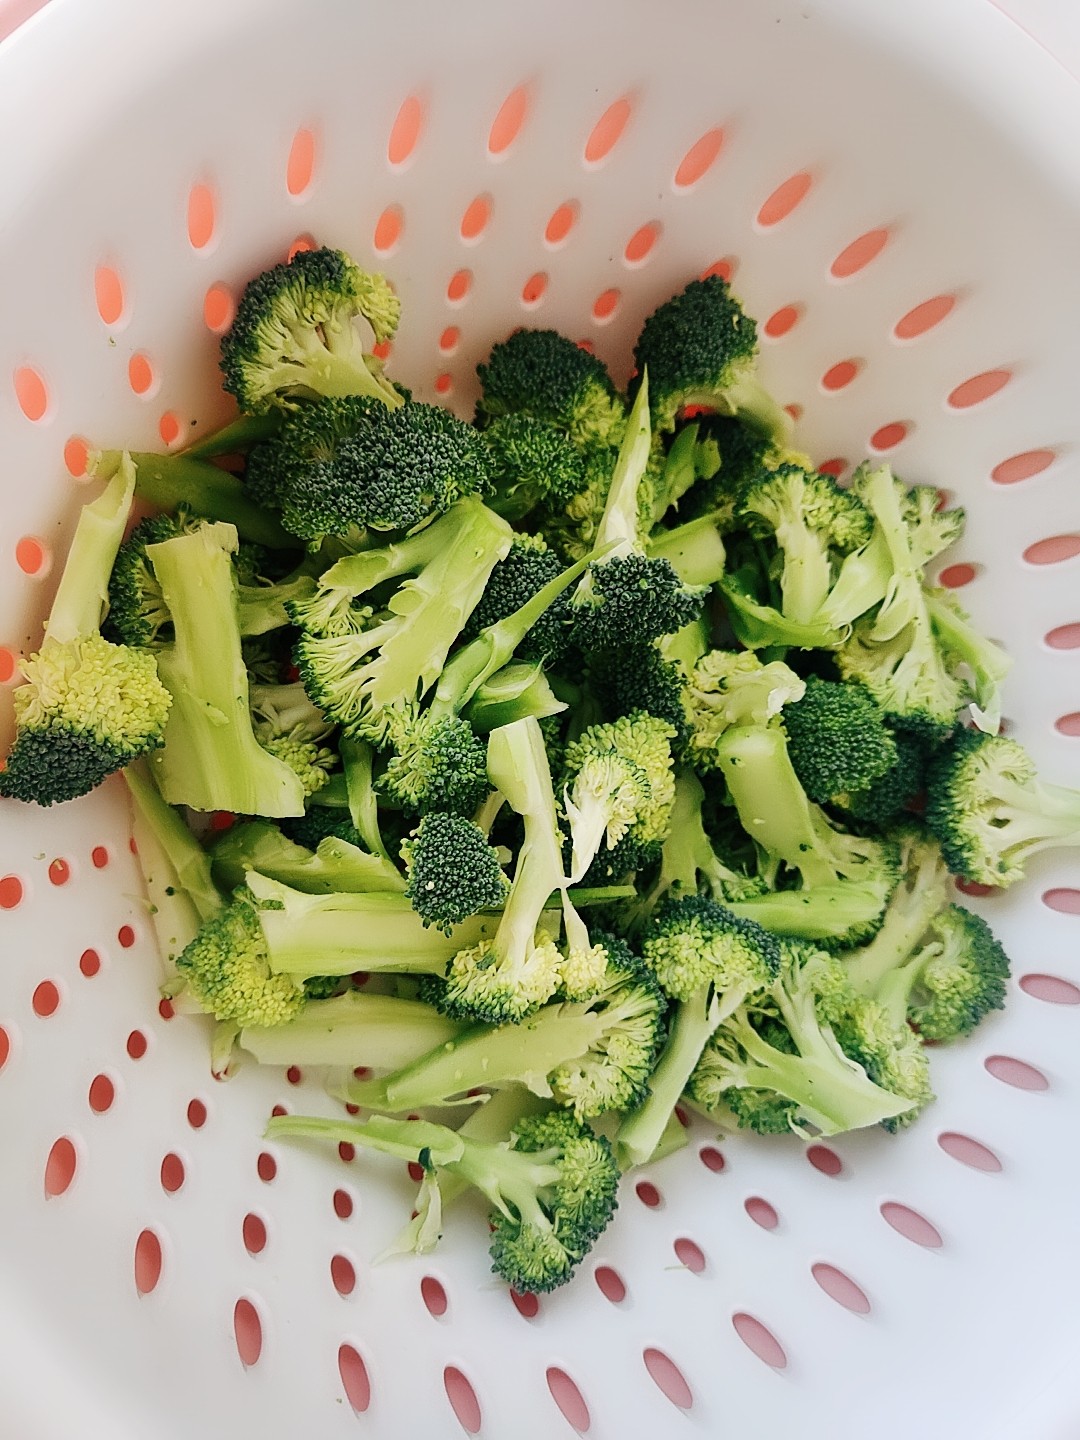 Fried Broccoli recipe